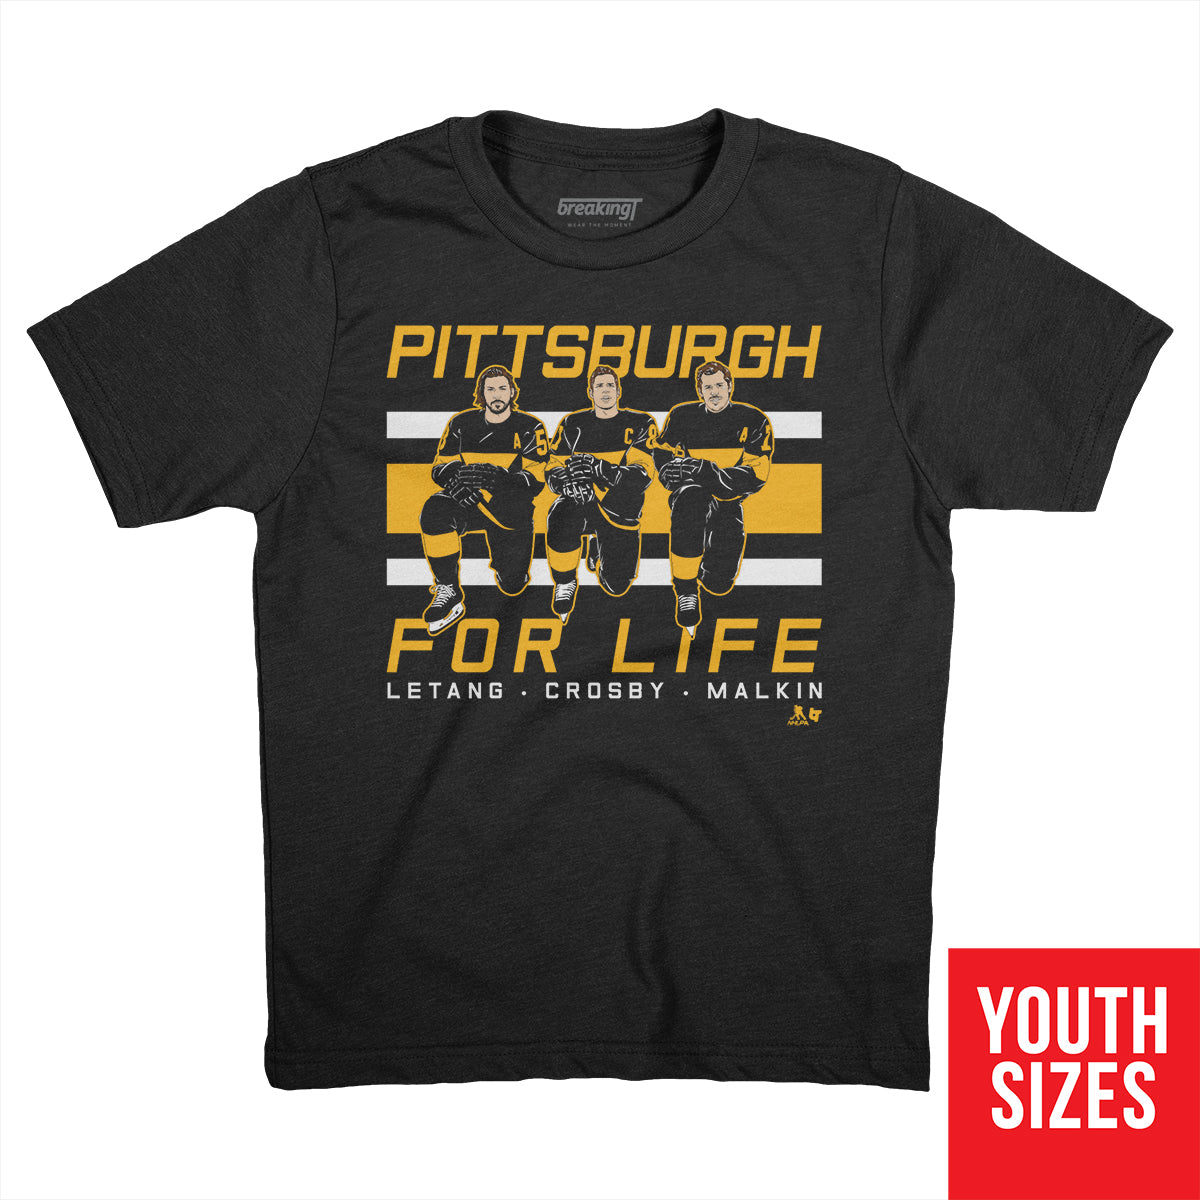 Kris Letang 53 A Canadian Hockey Player Pittsburgh Grunge T-Shirt